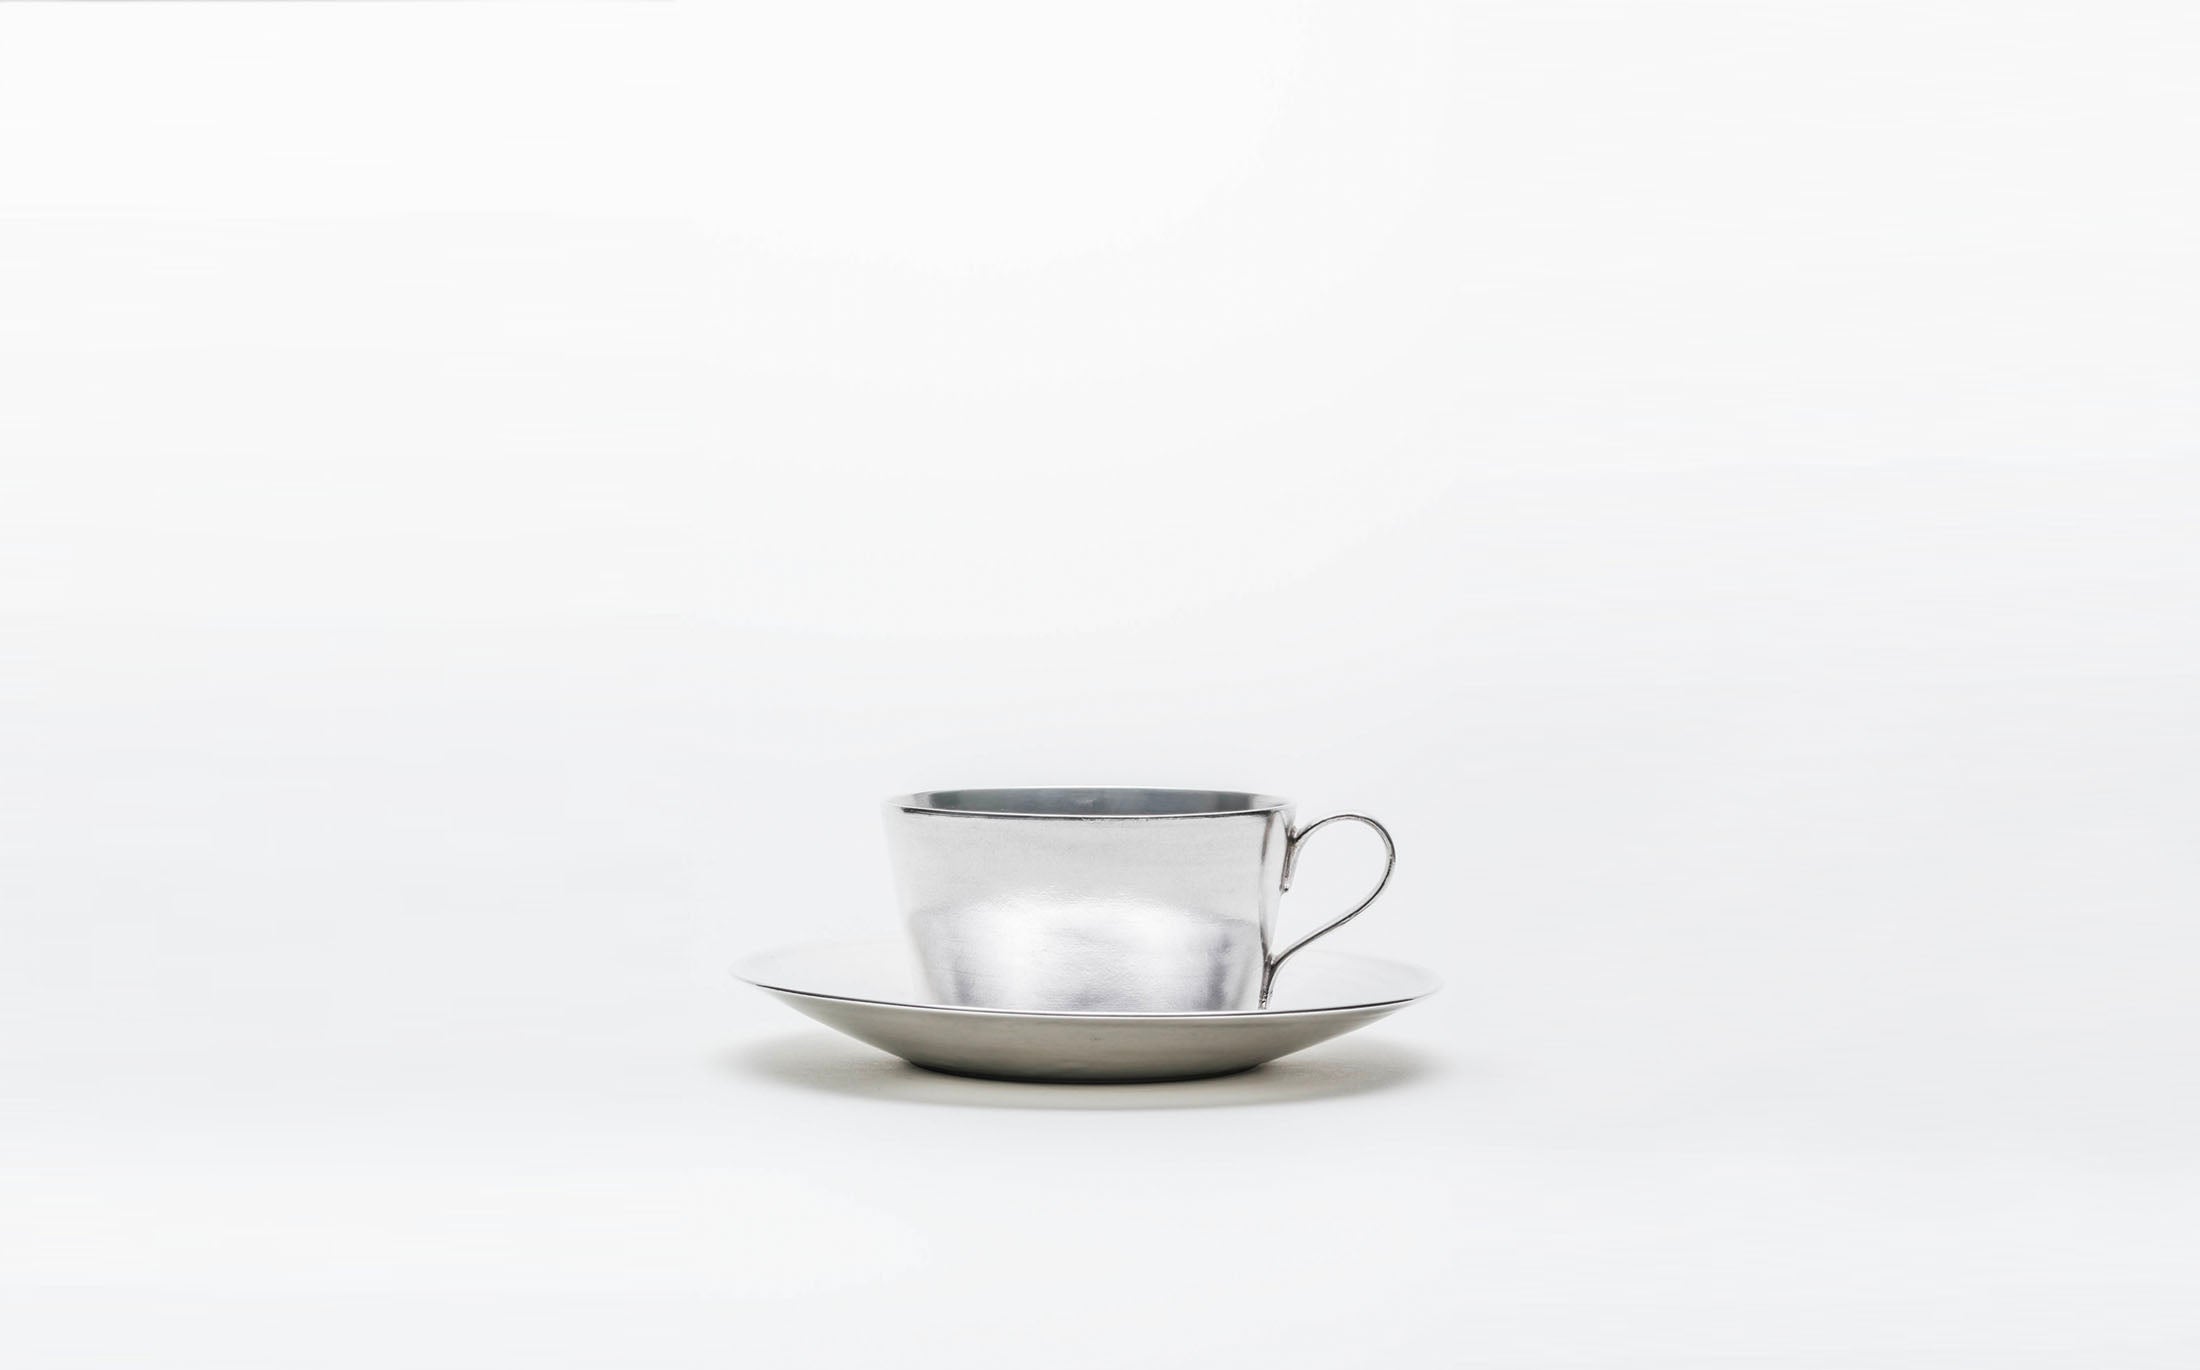 Shirotae - Silvered Porcelain - Tea Cup and Saucer